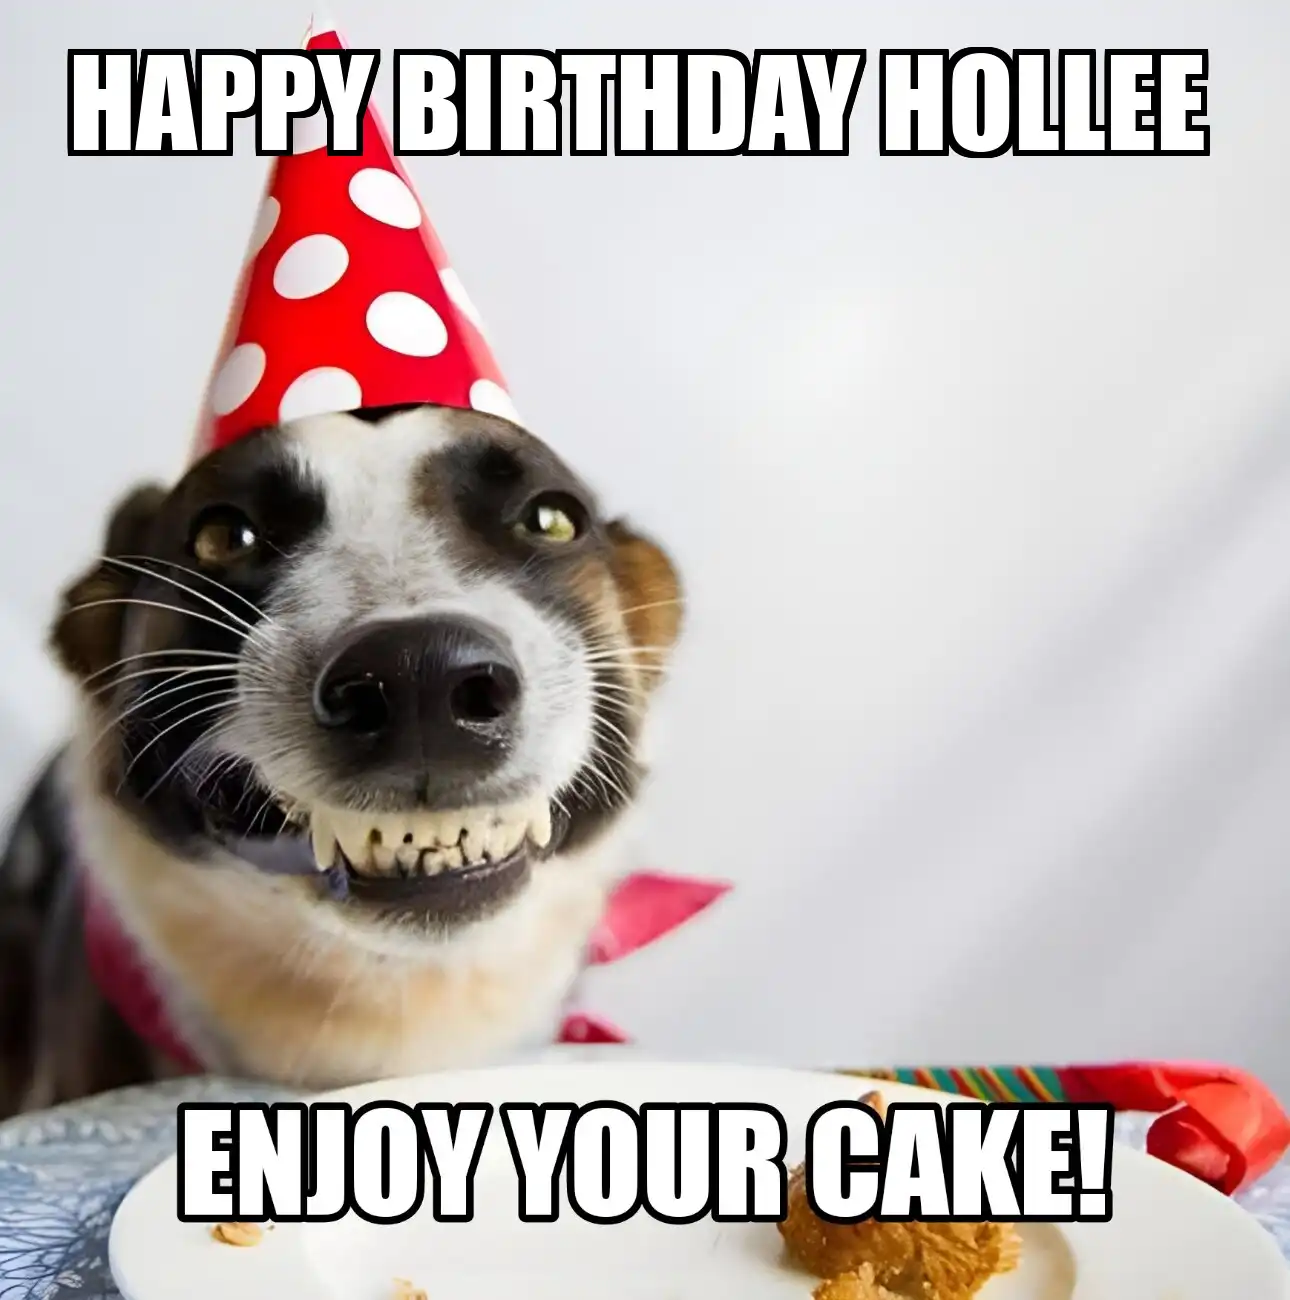 Happy Birthday Hollee Enjoy Your Cake Dog Meme